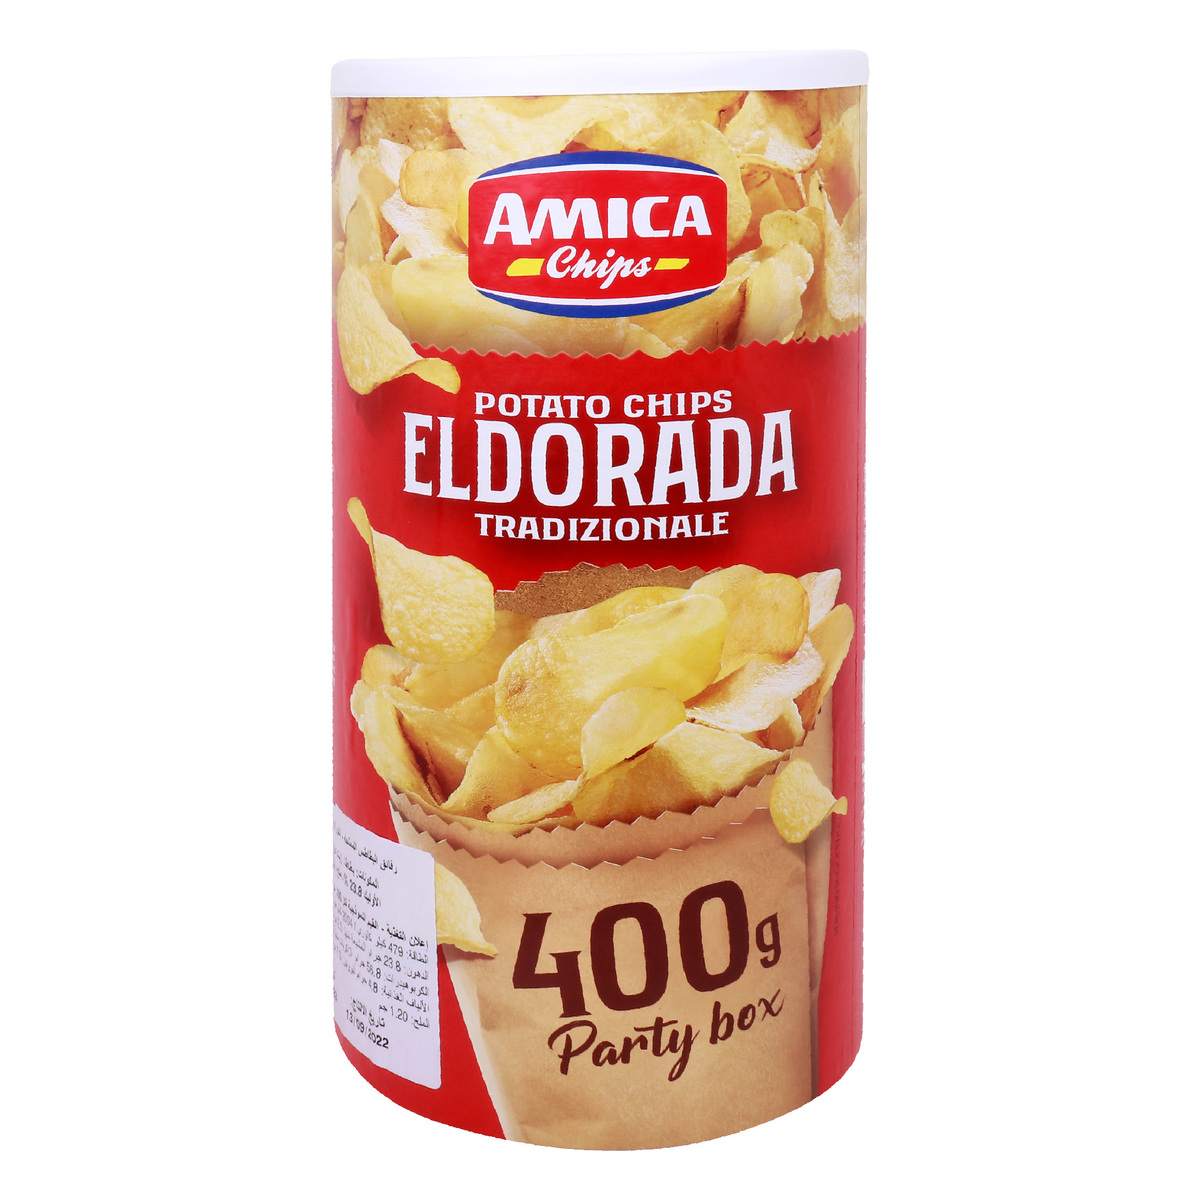 Amica Chips Eldorada Tradizionale Can Potato Chips 400 g